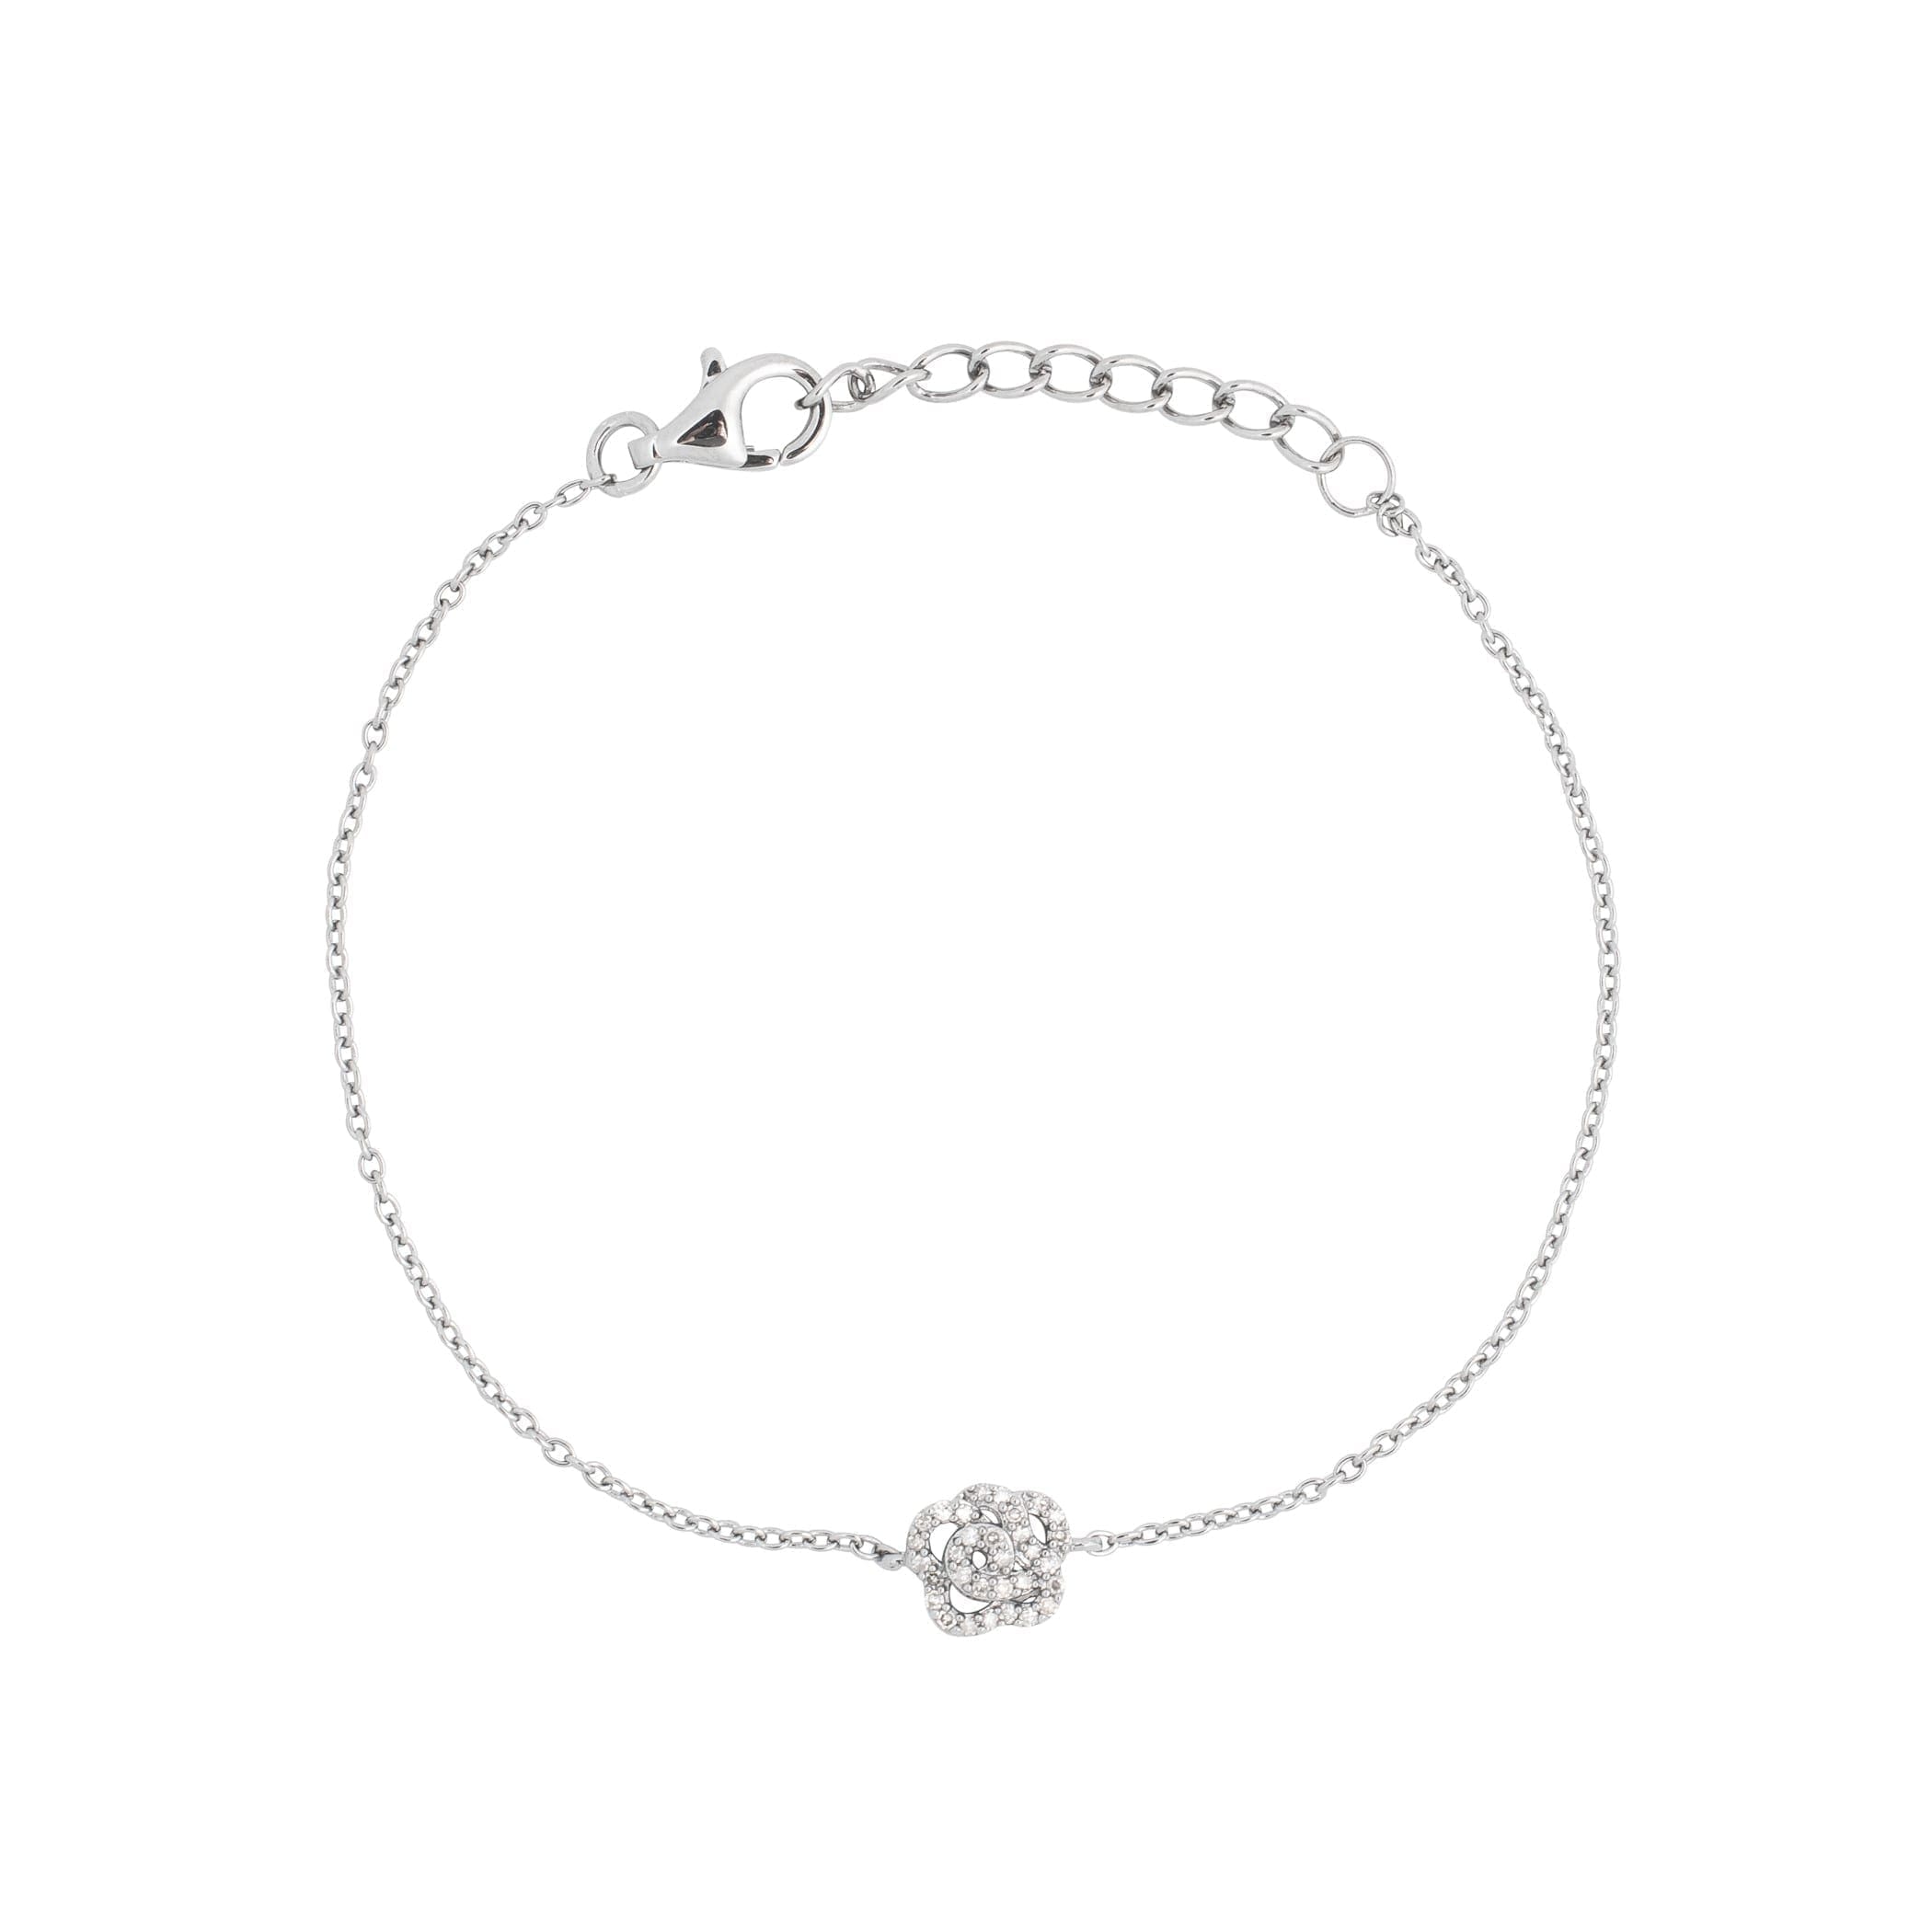 Diamond Rose Chain Bracelet Sterling Silver